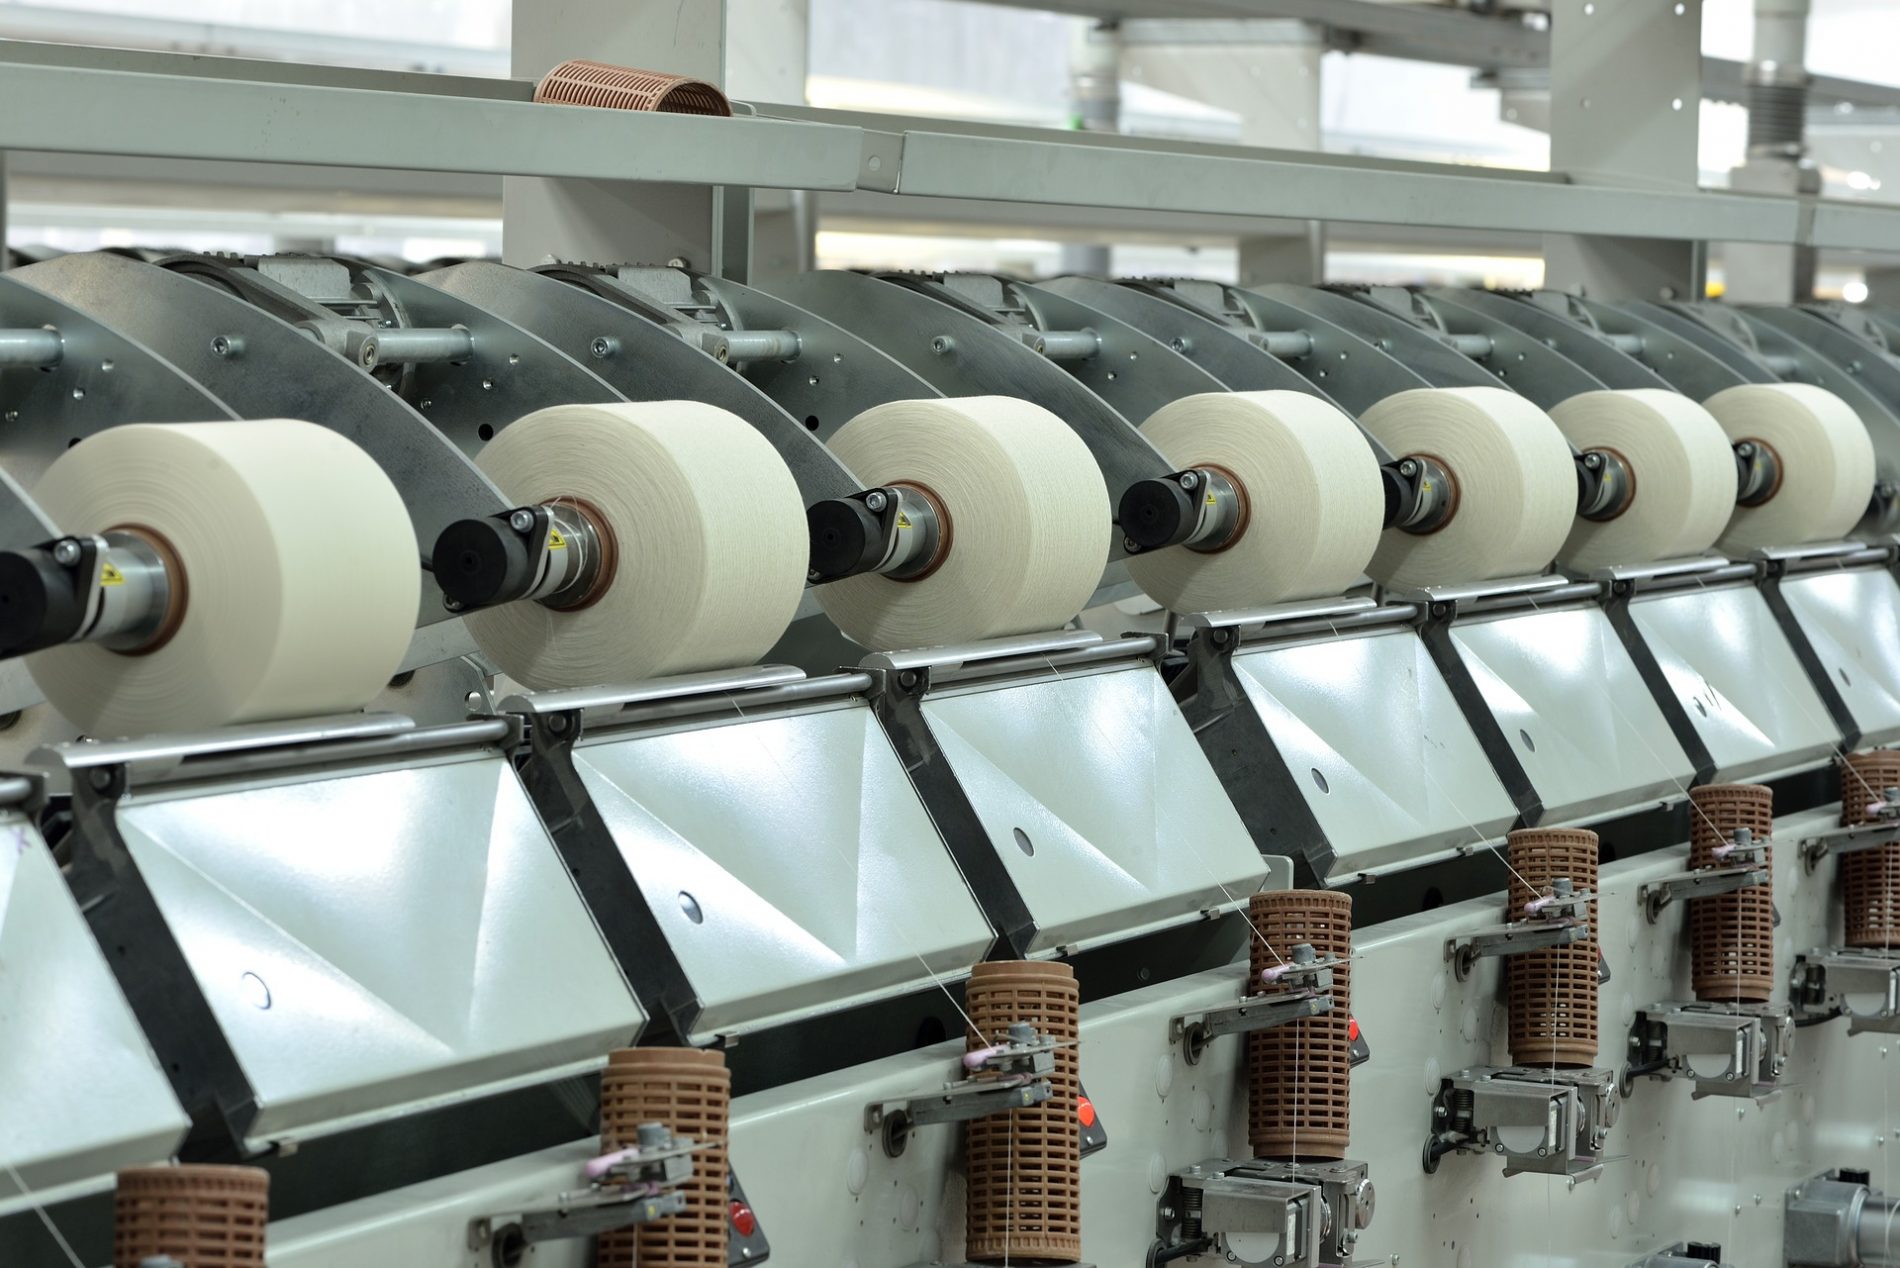 The Dhar Textile Mills Ltd